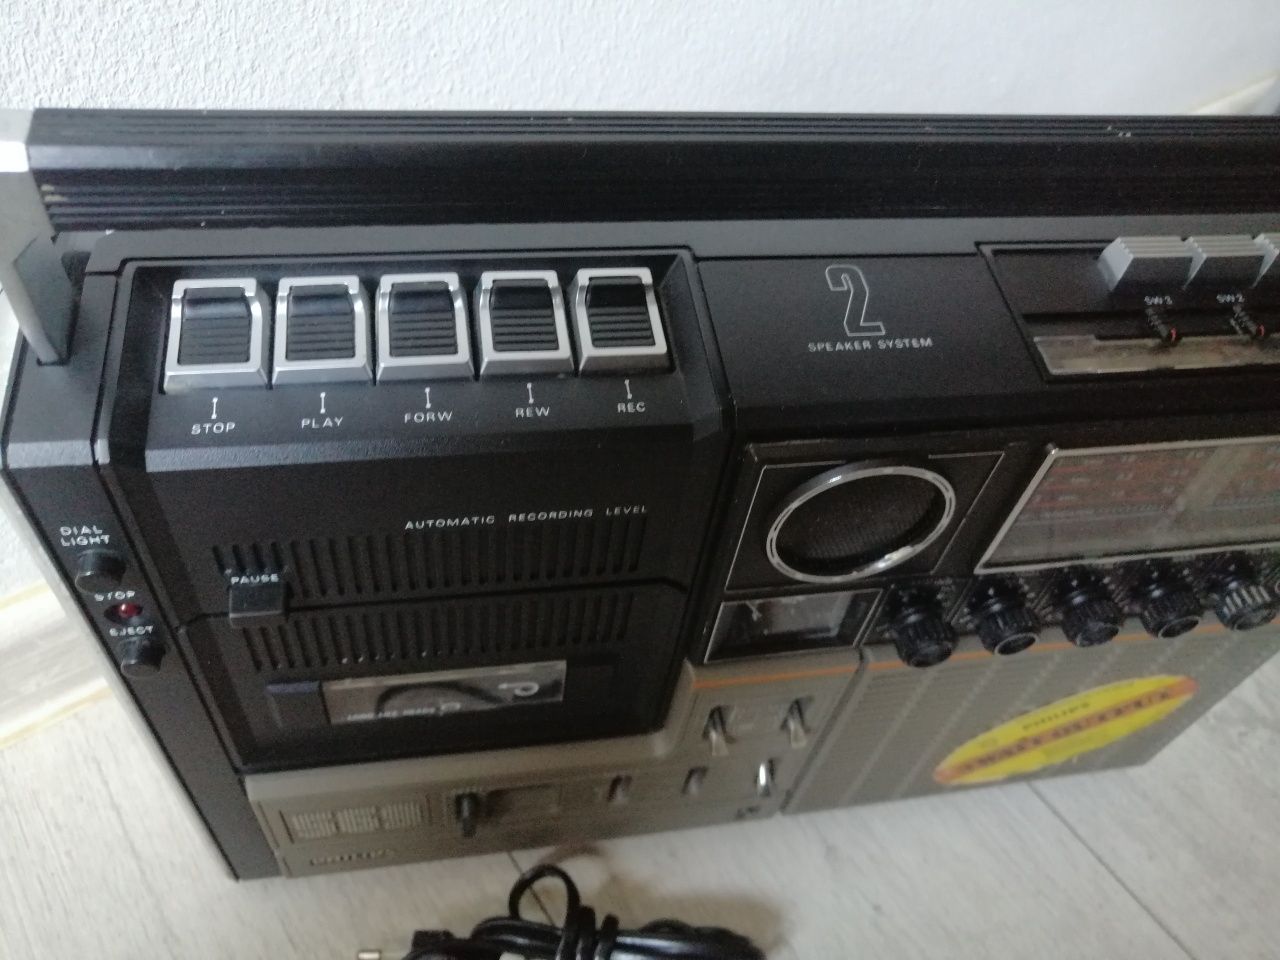 Radio casetofon vintage philips